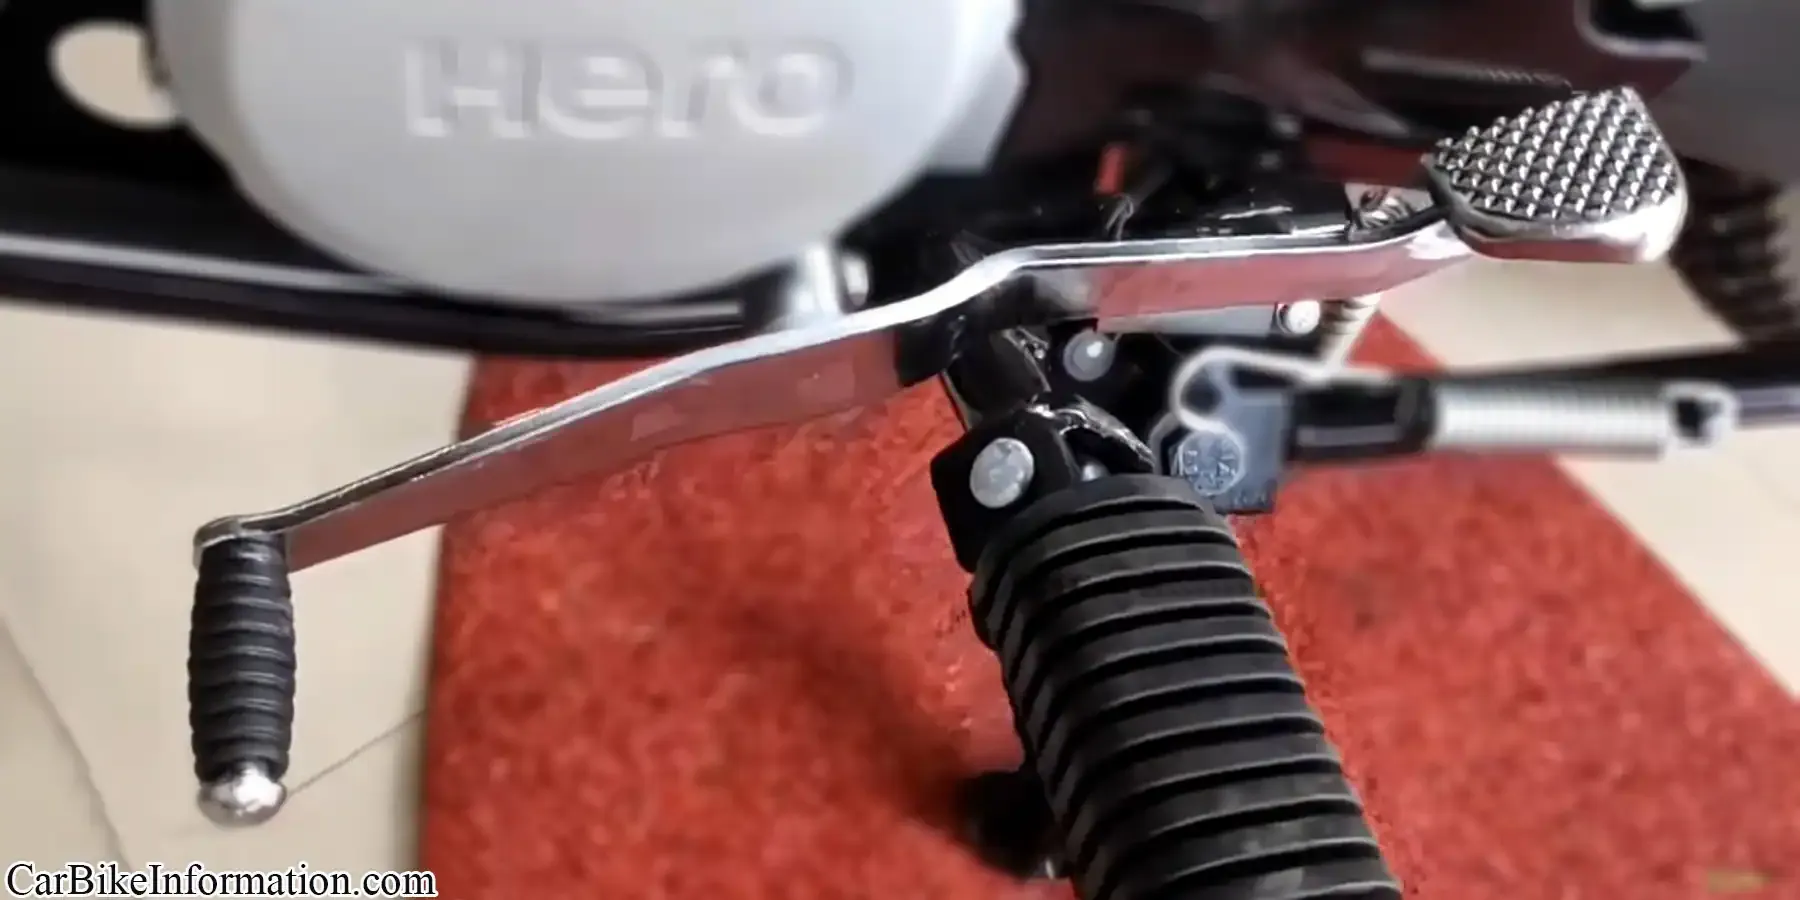 Hero HF Deluxe Gear Box